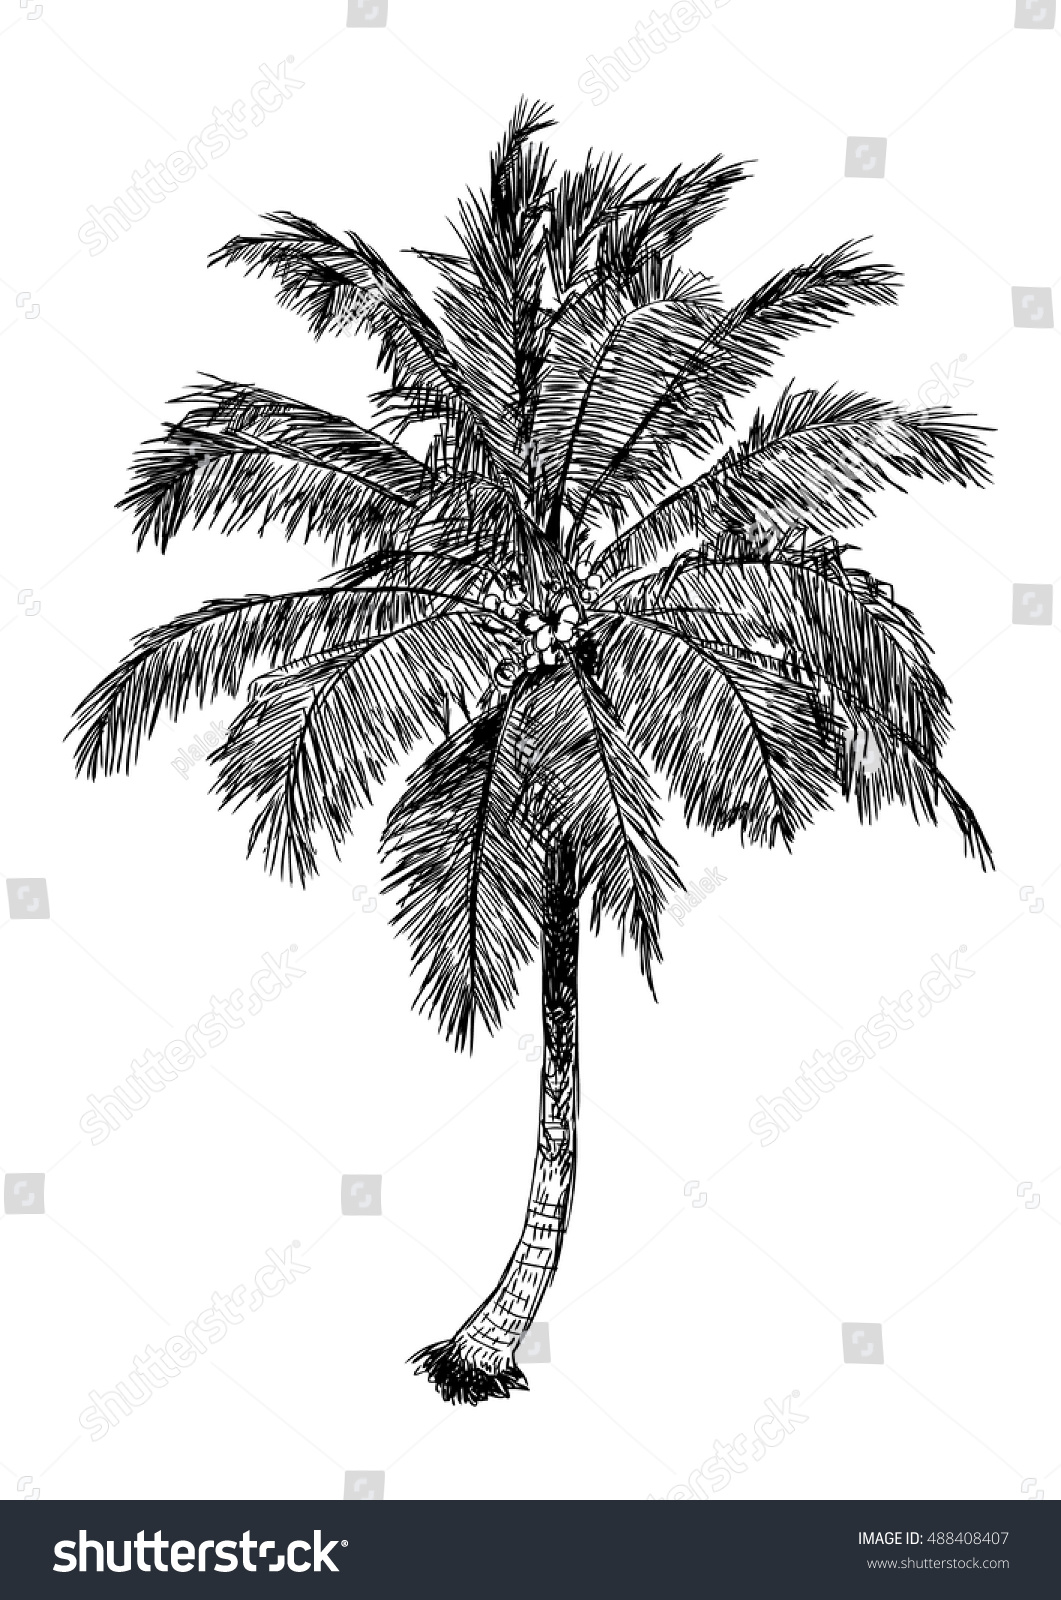 Hand Drawn Illustration Coconut Tree Sketch Stock Vector 488408407 ...